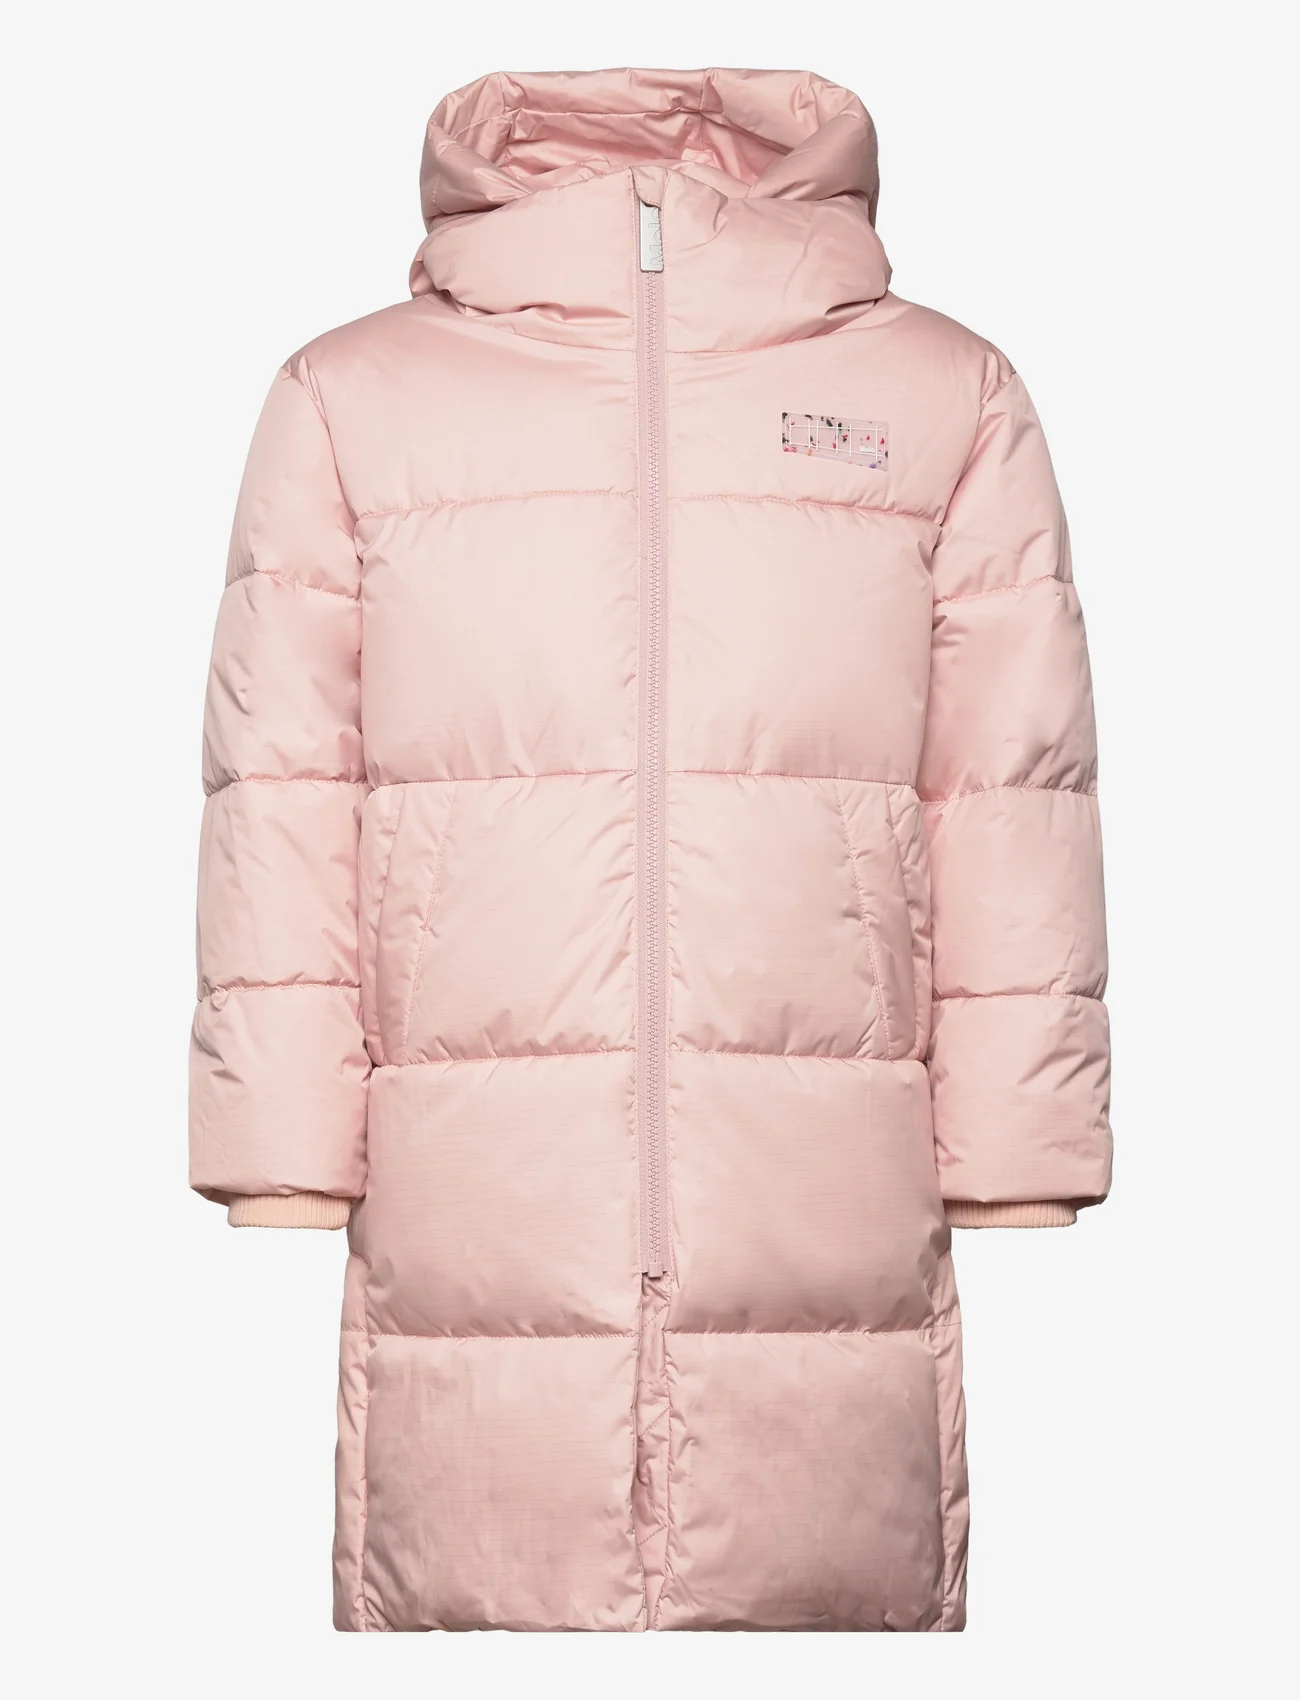 Molo - Harper - winter jackets - petal blush - 0